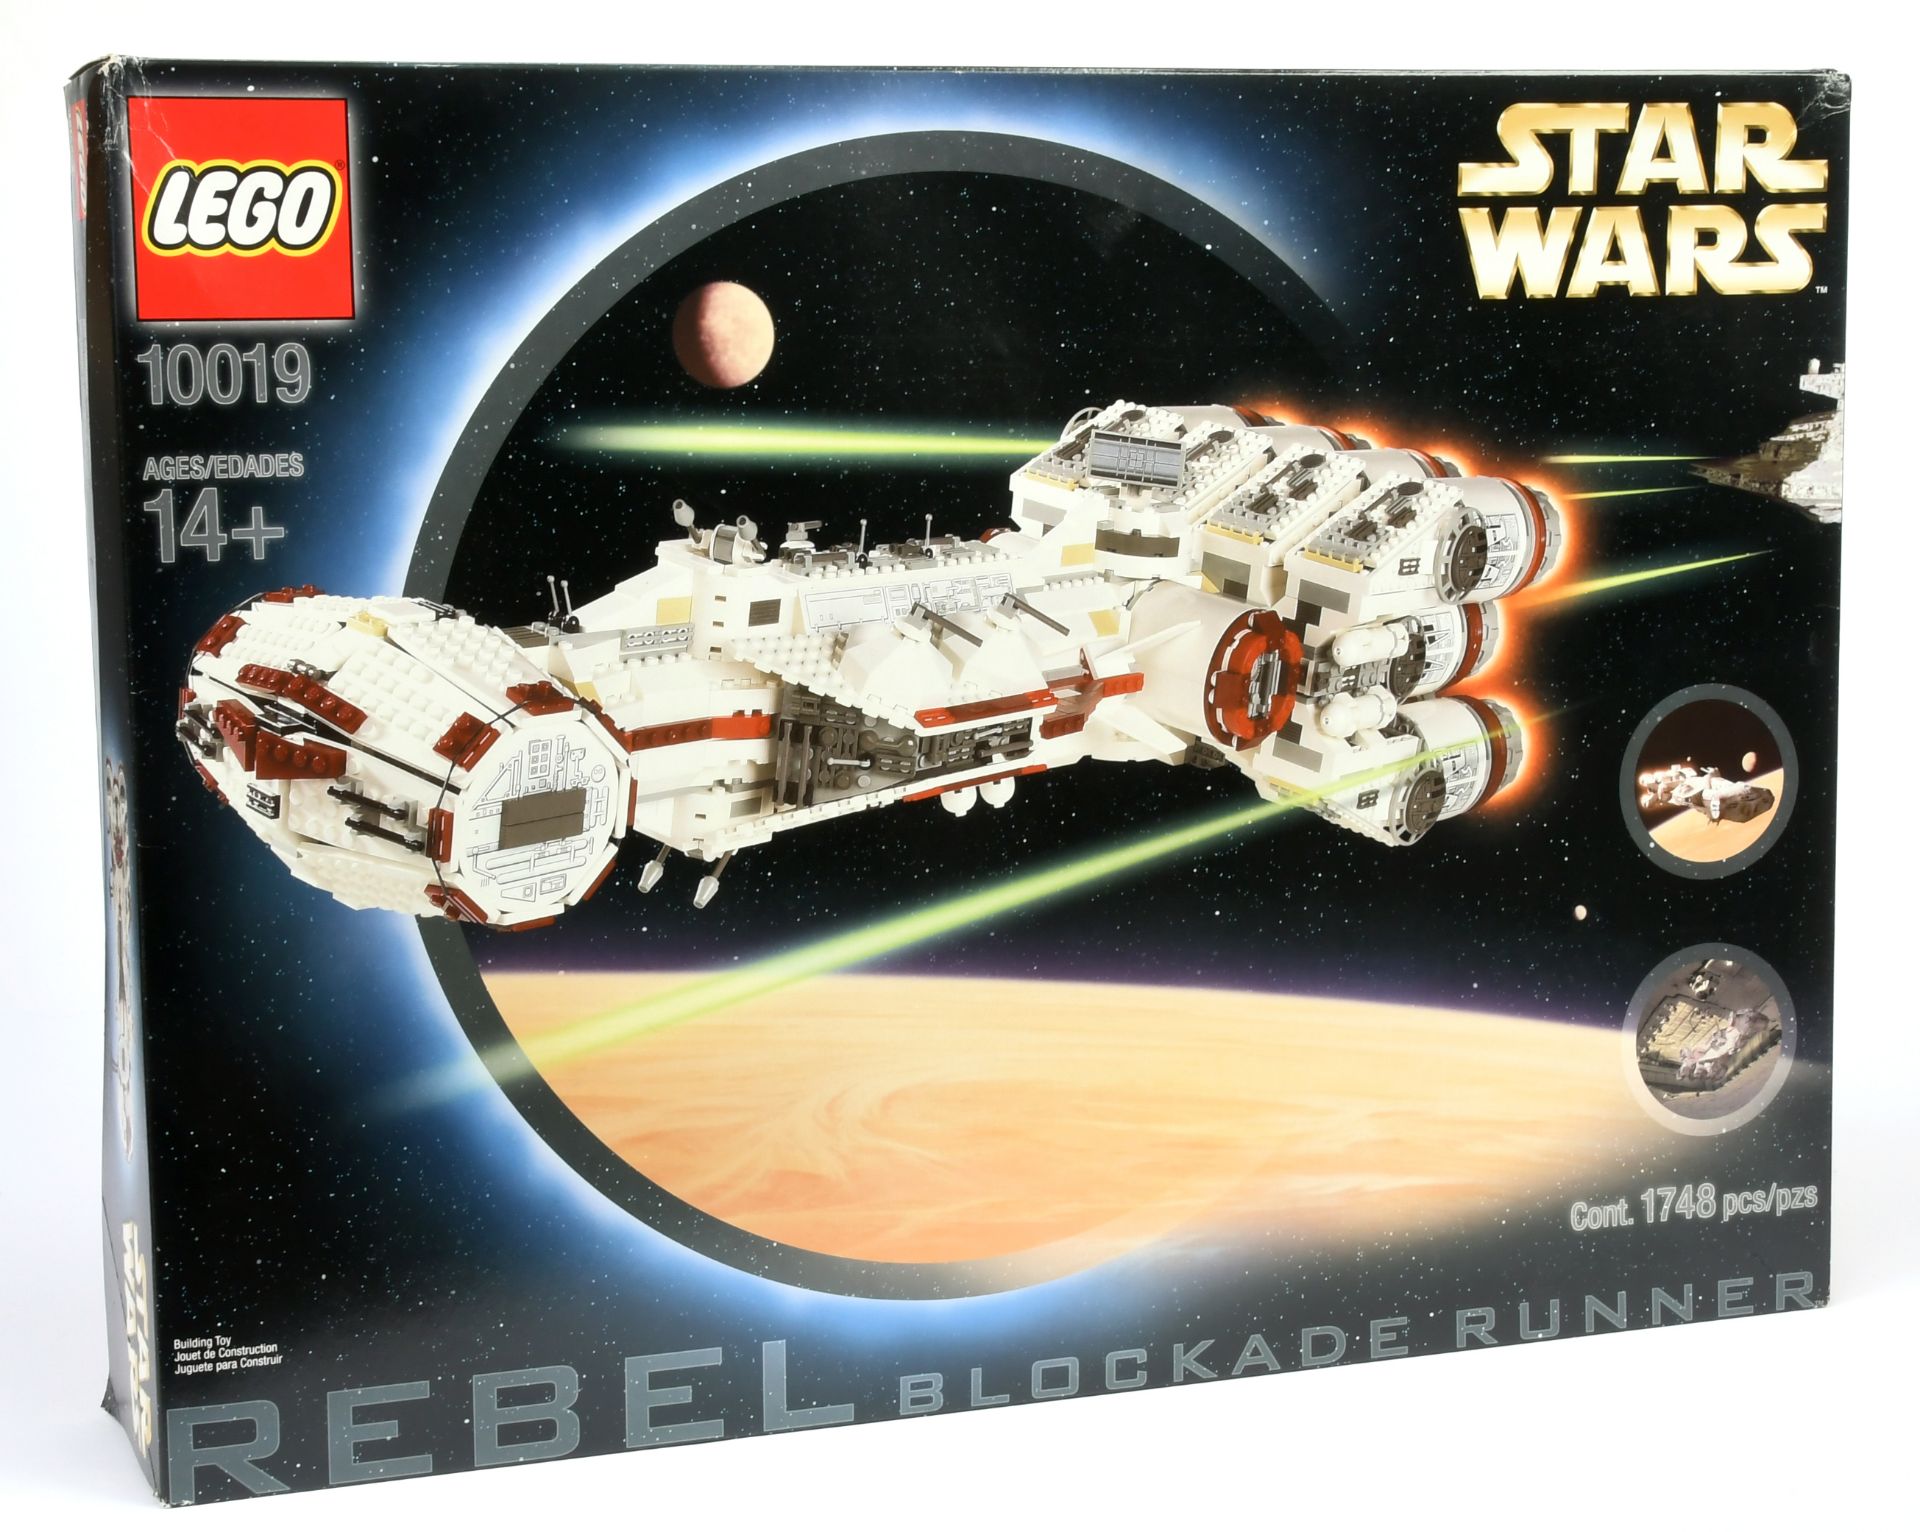 Lego Star Wars 10019 Rebel Blockade Runner - Tantive IV - 2001/2002 Issue, within Excellent seale...